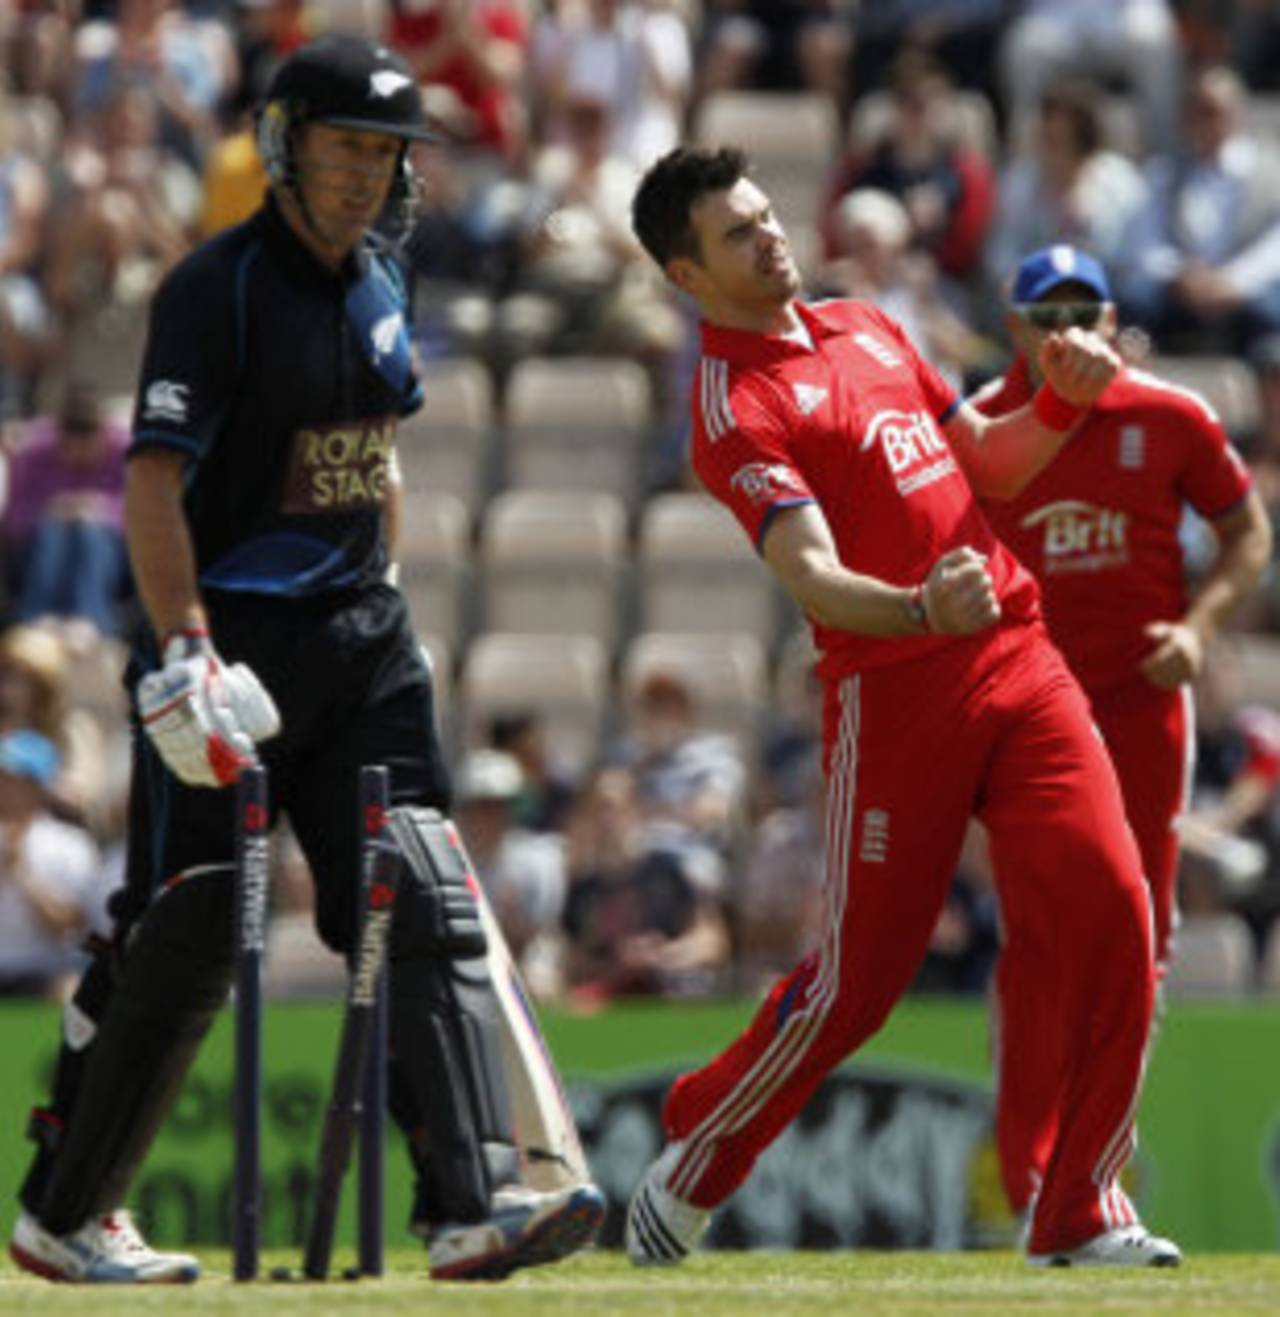 James Anderson celebrates castling Luke Ronchi, England v New Zealand, 2nd ODI, Ageas Bowl, June 2, 2013